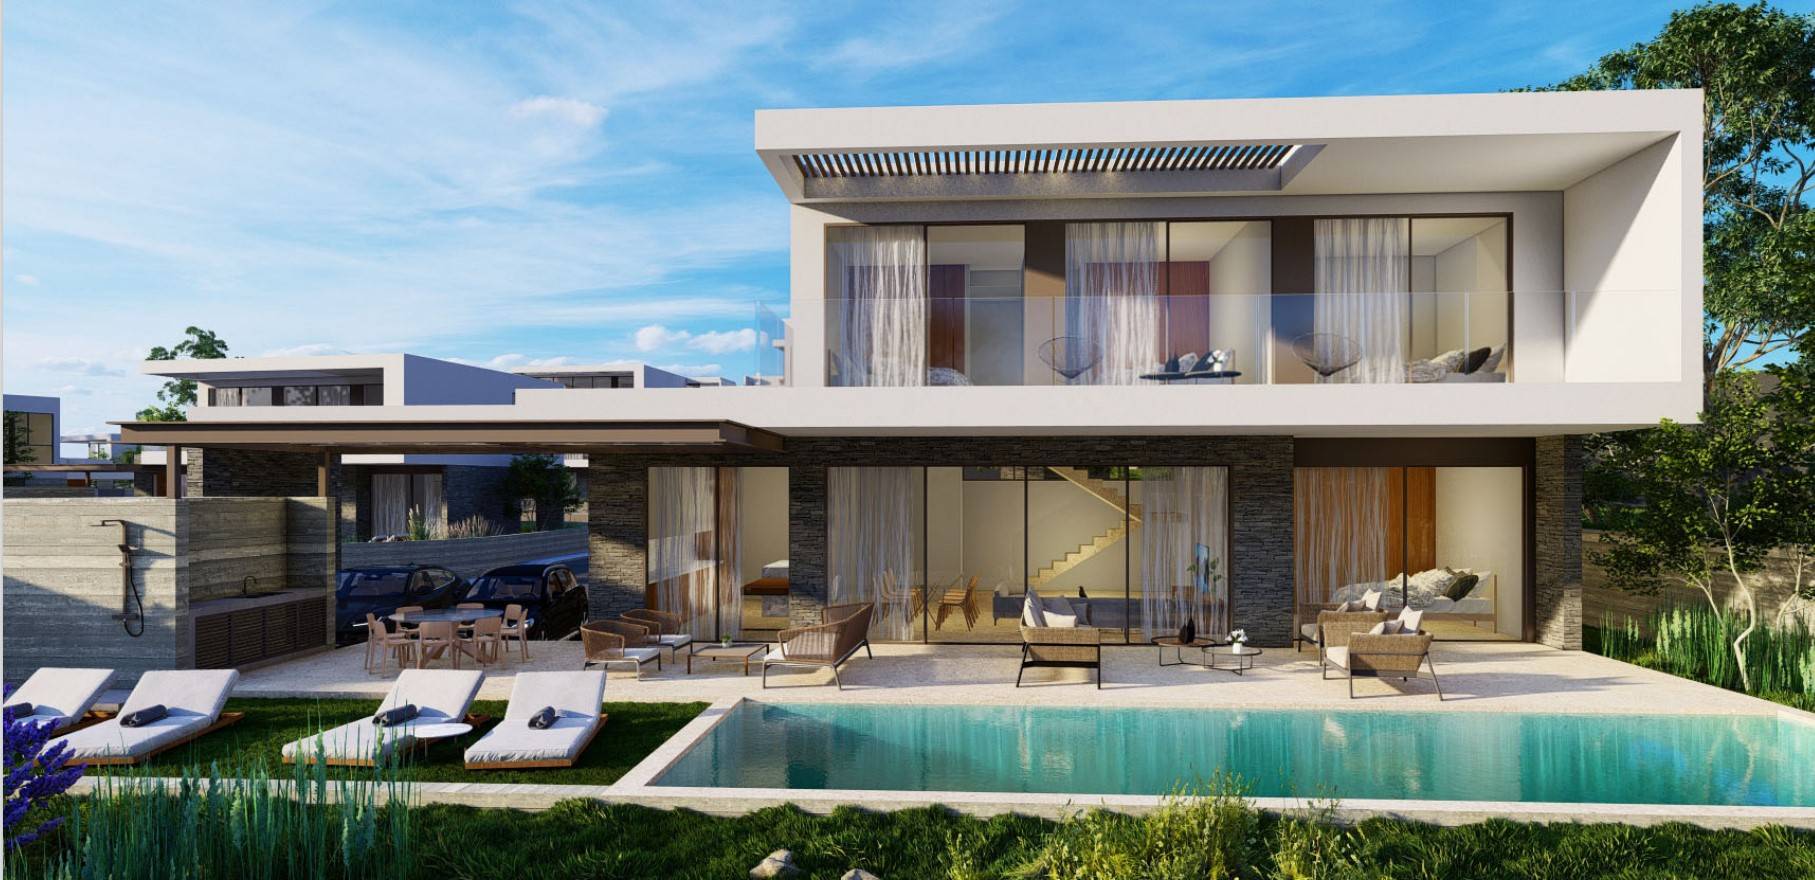 Bespoke luxury villa with sea views